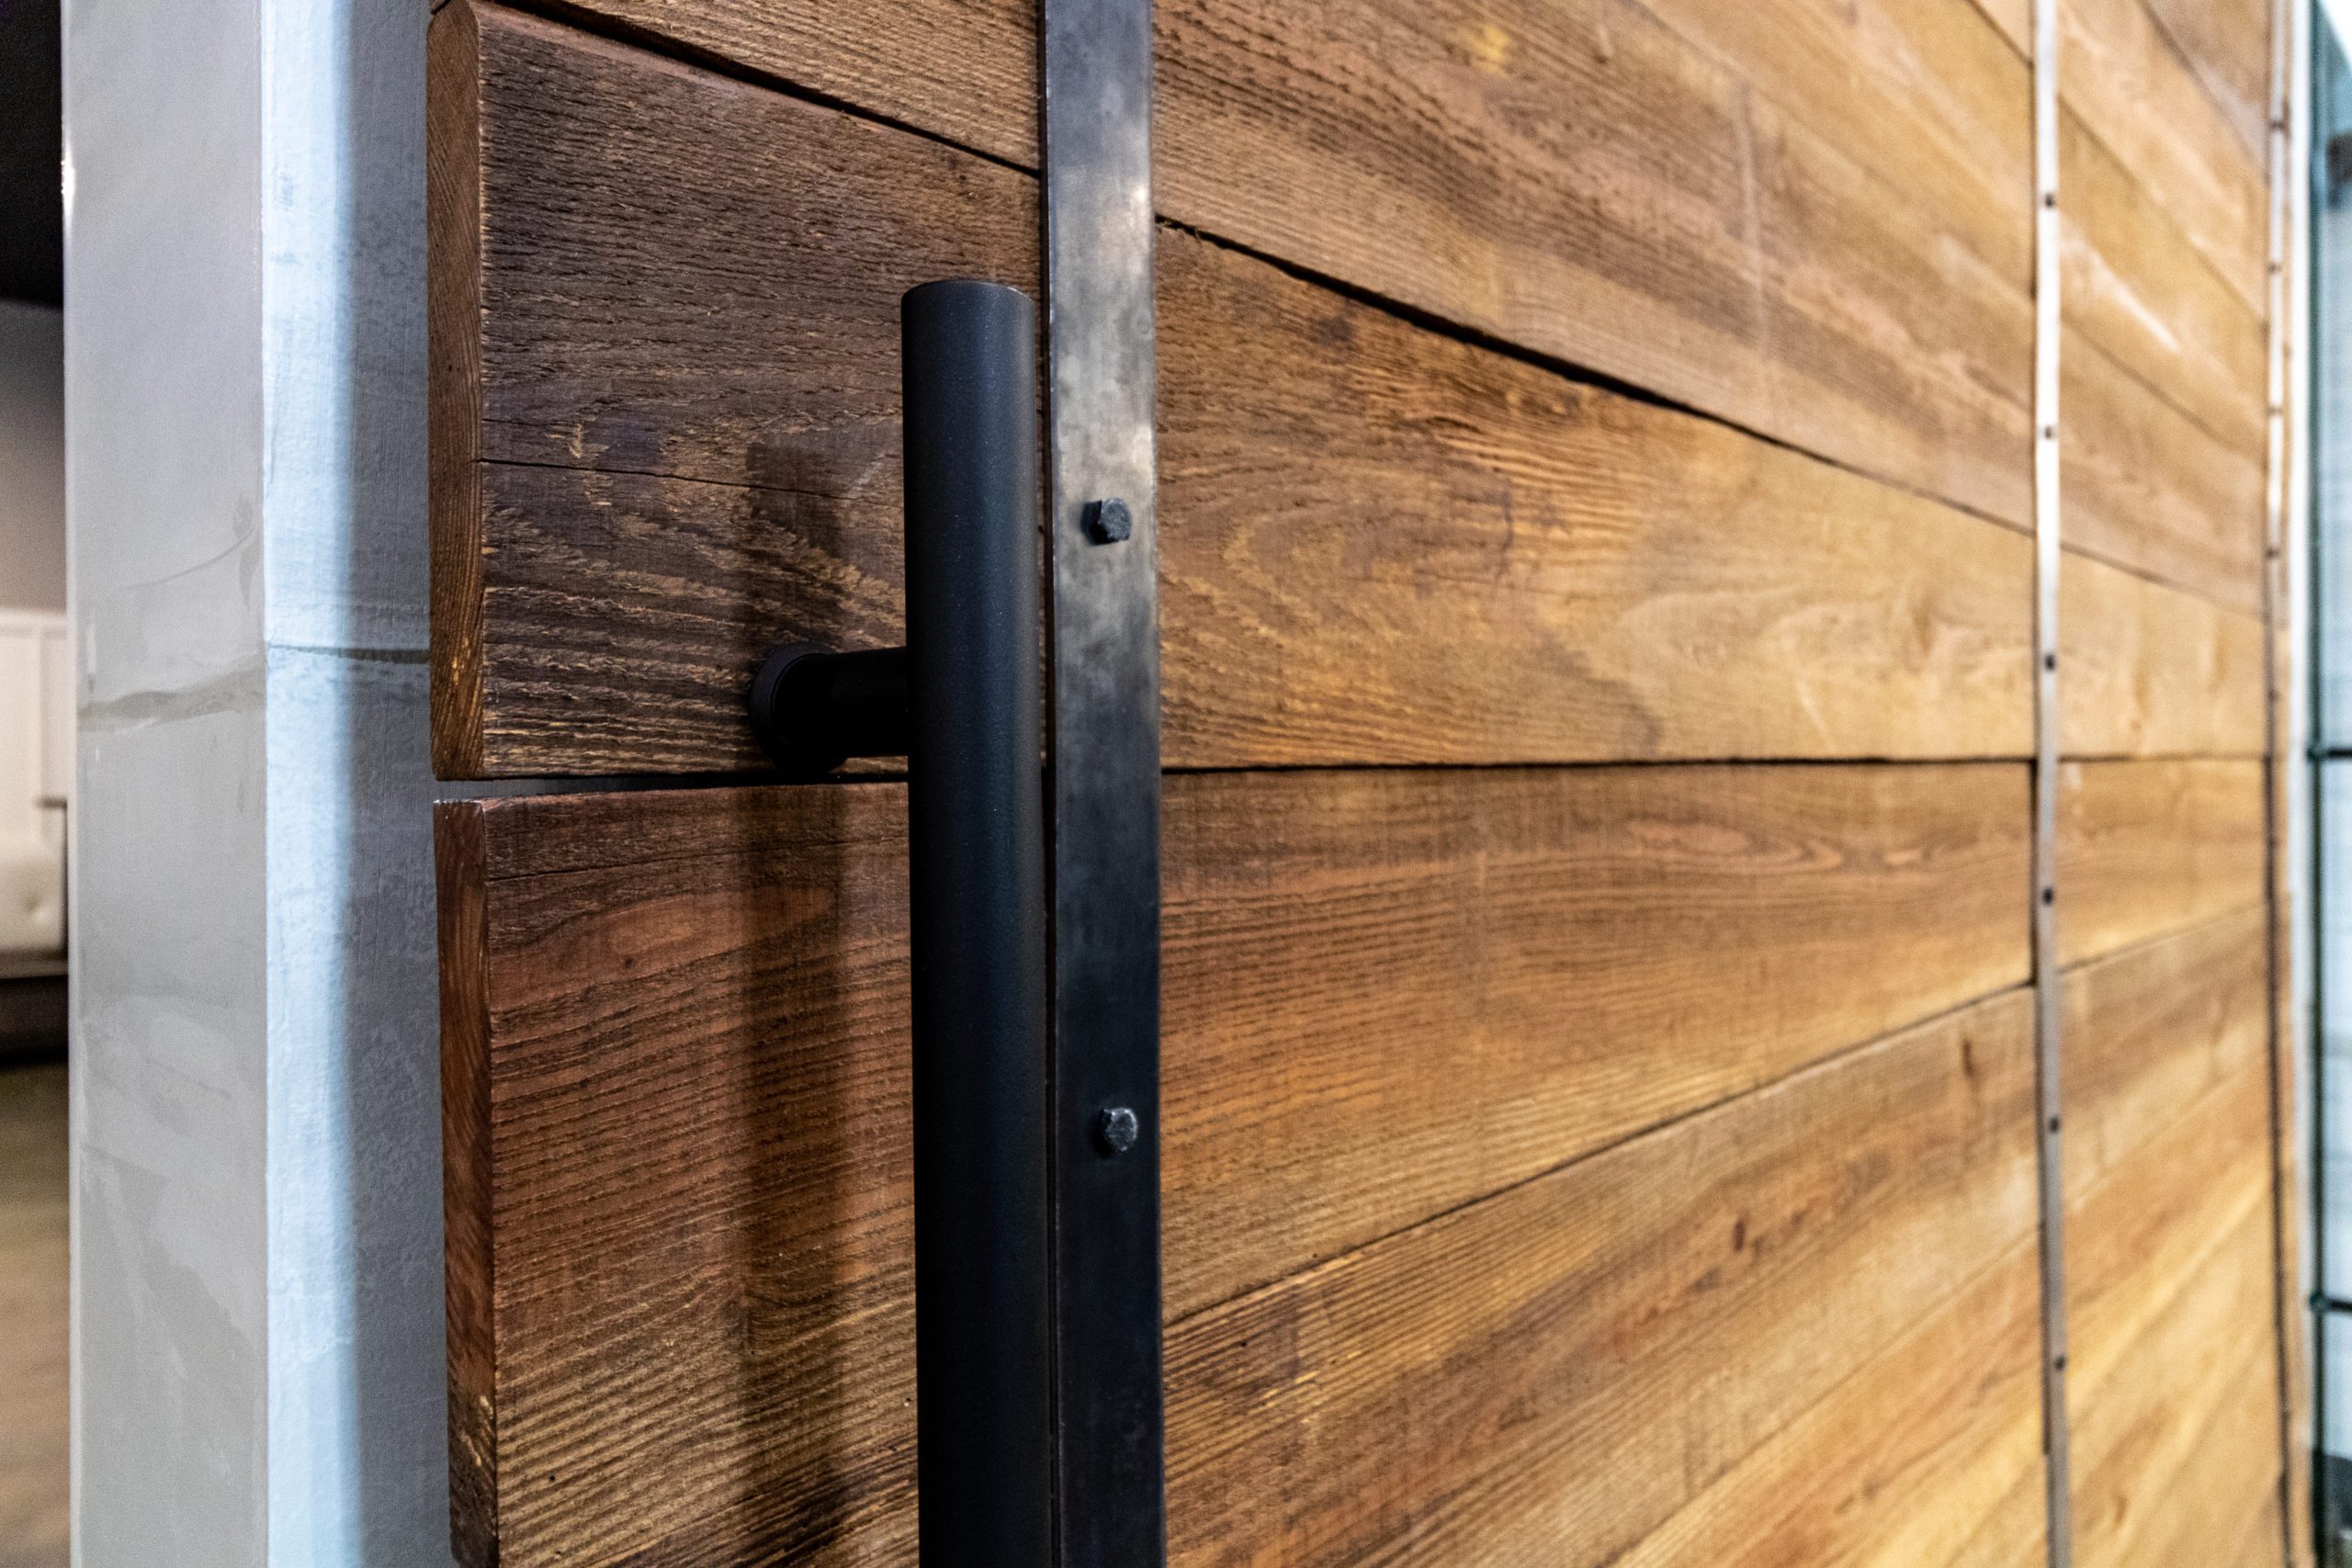 A close-up of a sliding wooden door